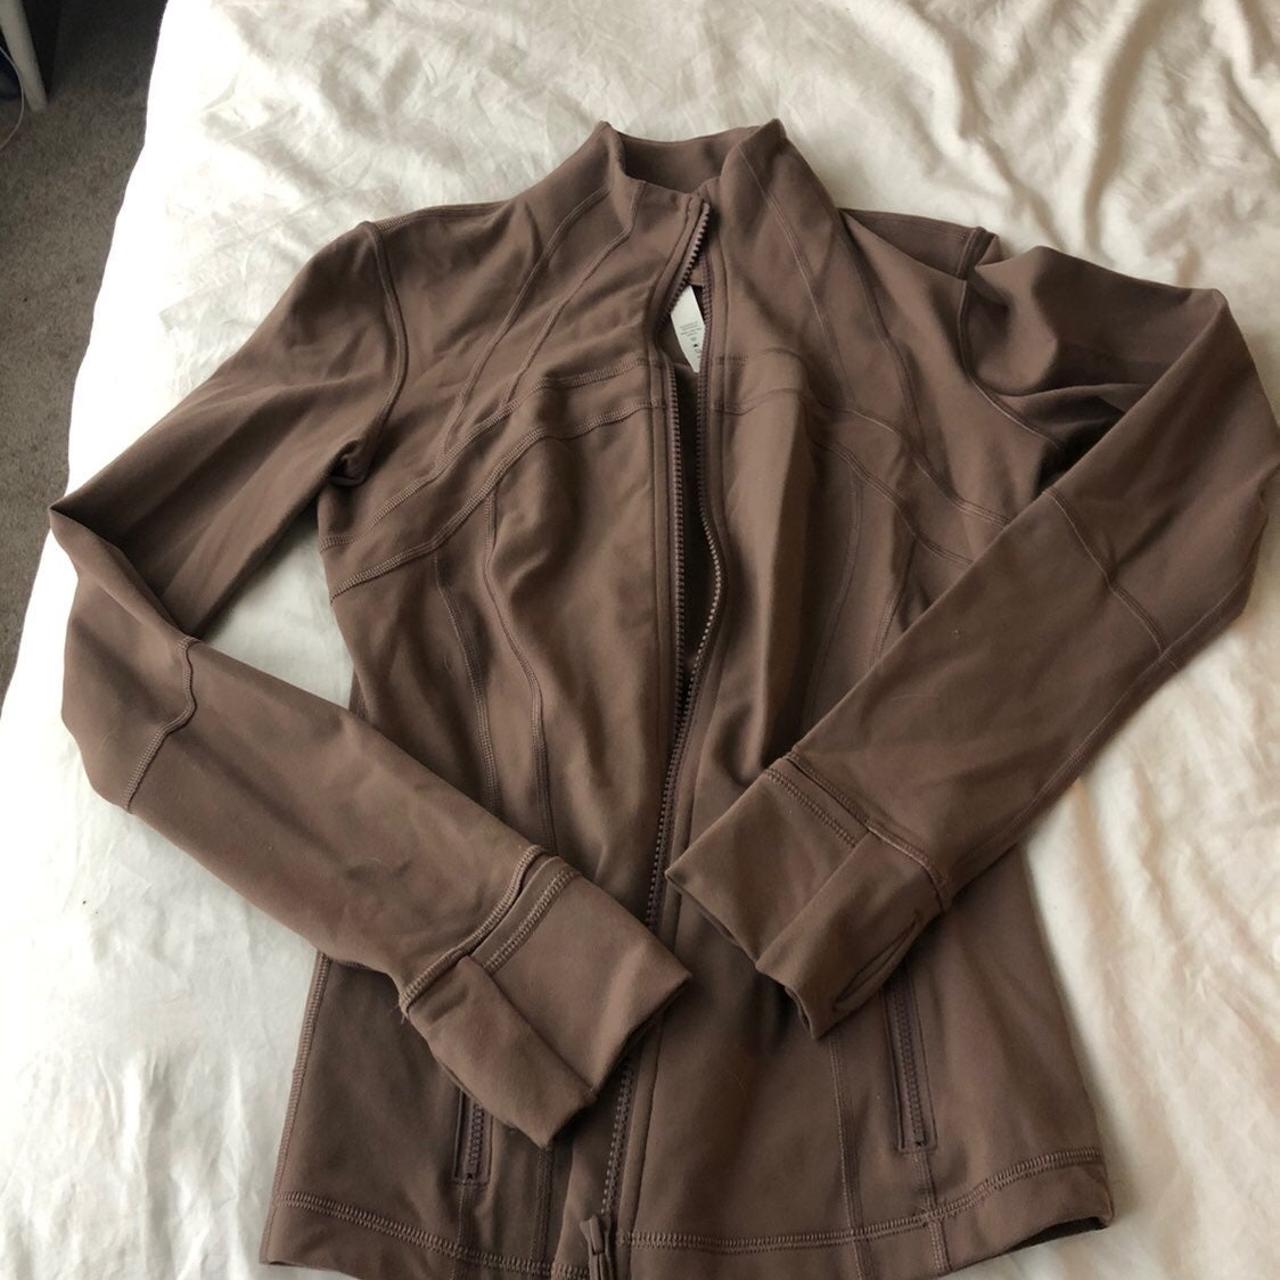 Lululemon Define Jacket in Copper brown. Pilling - Depop